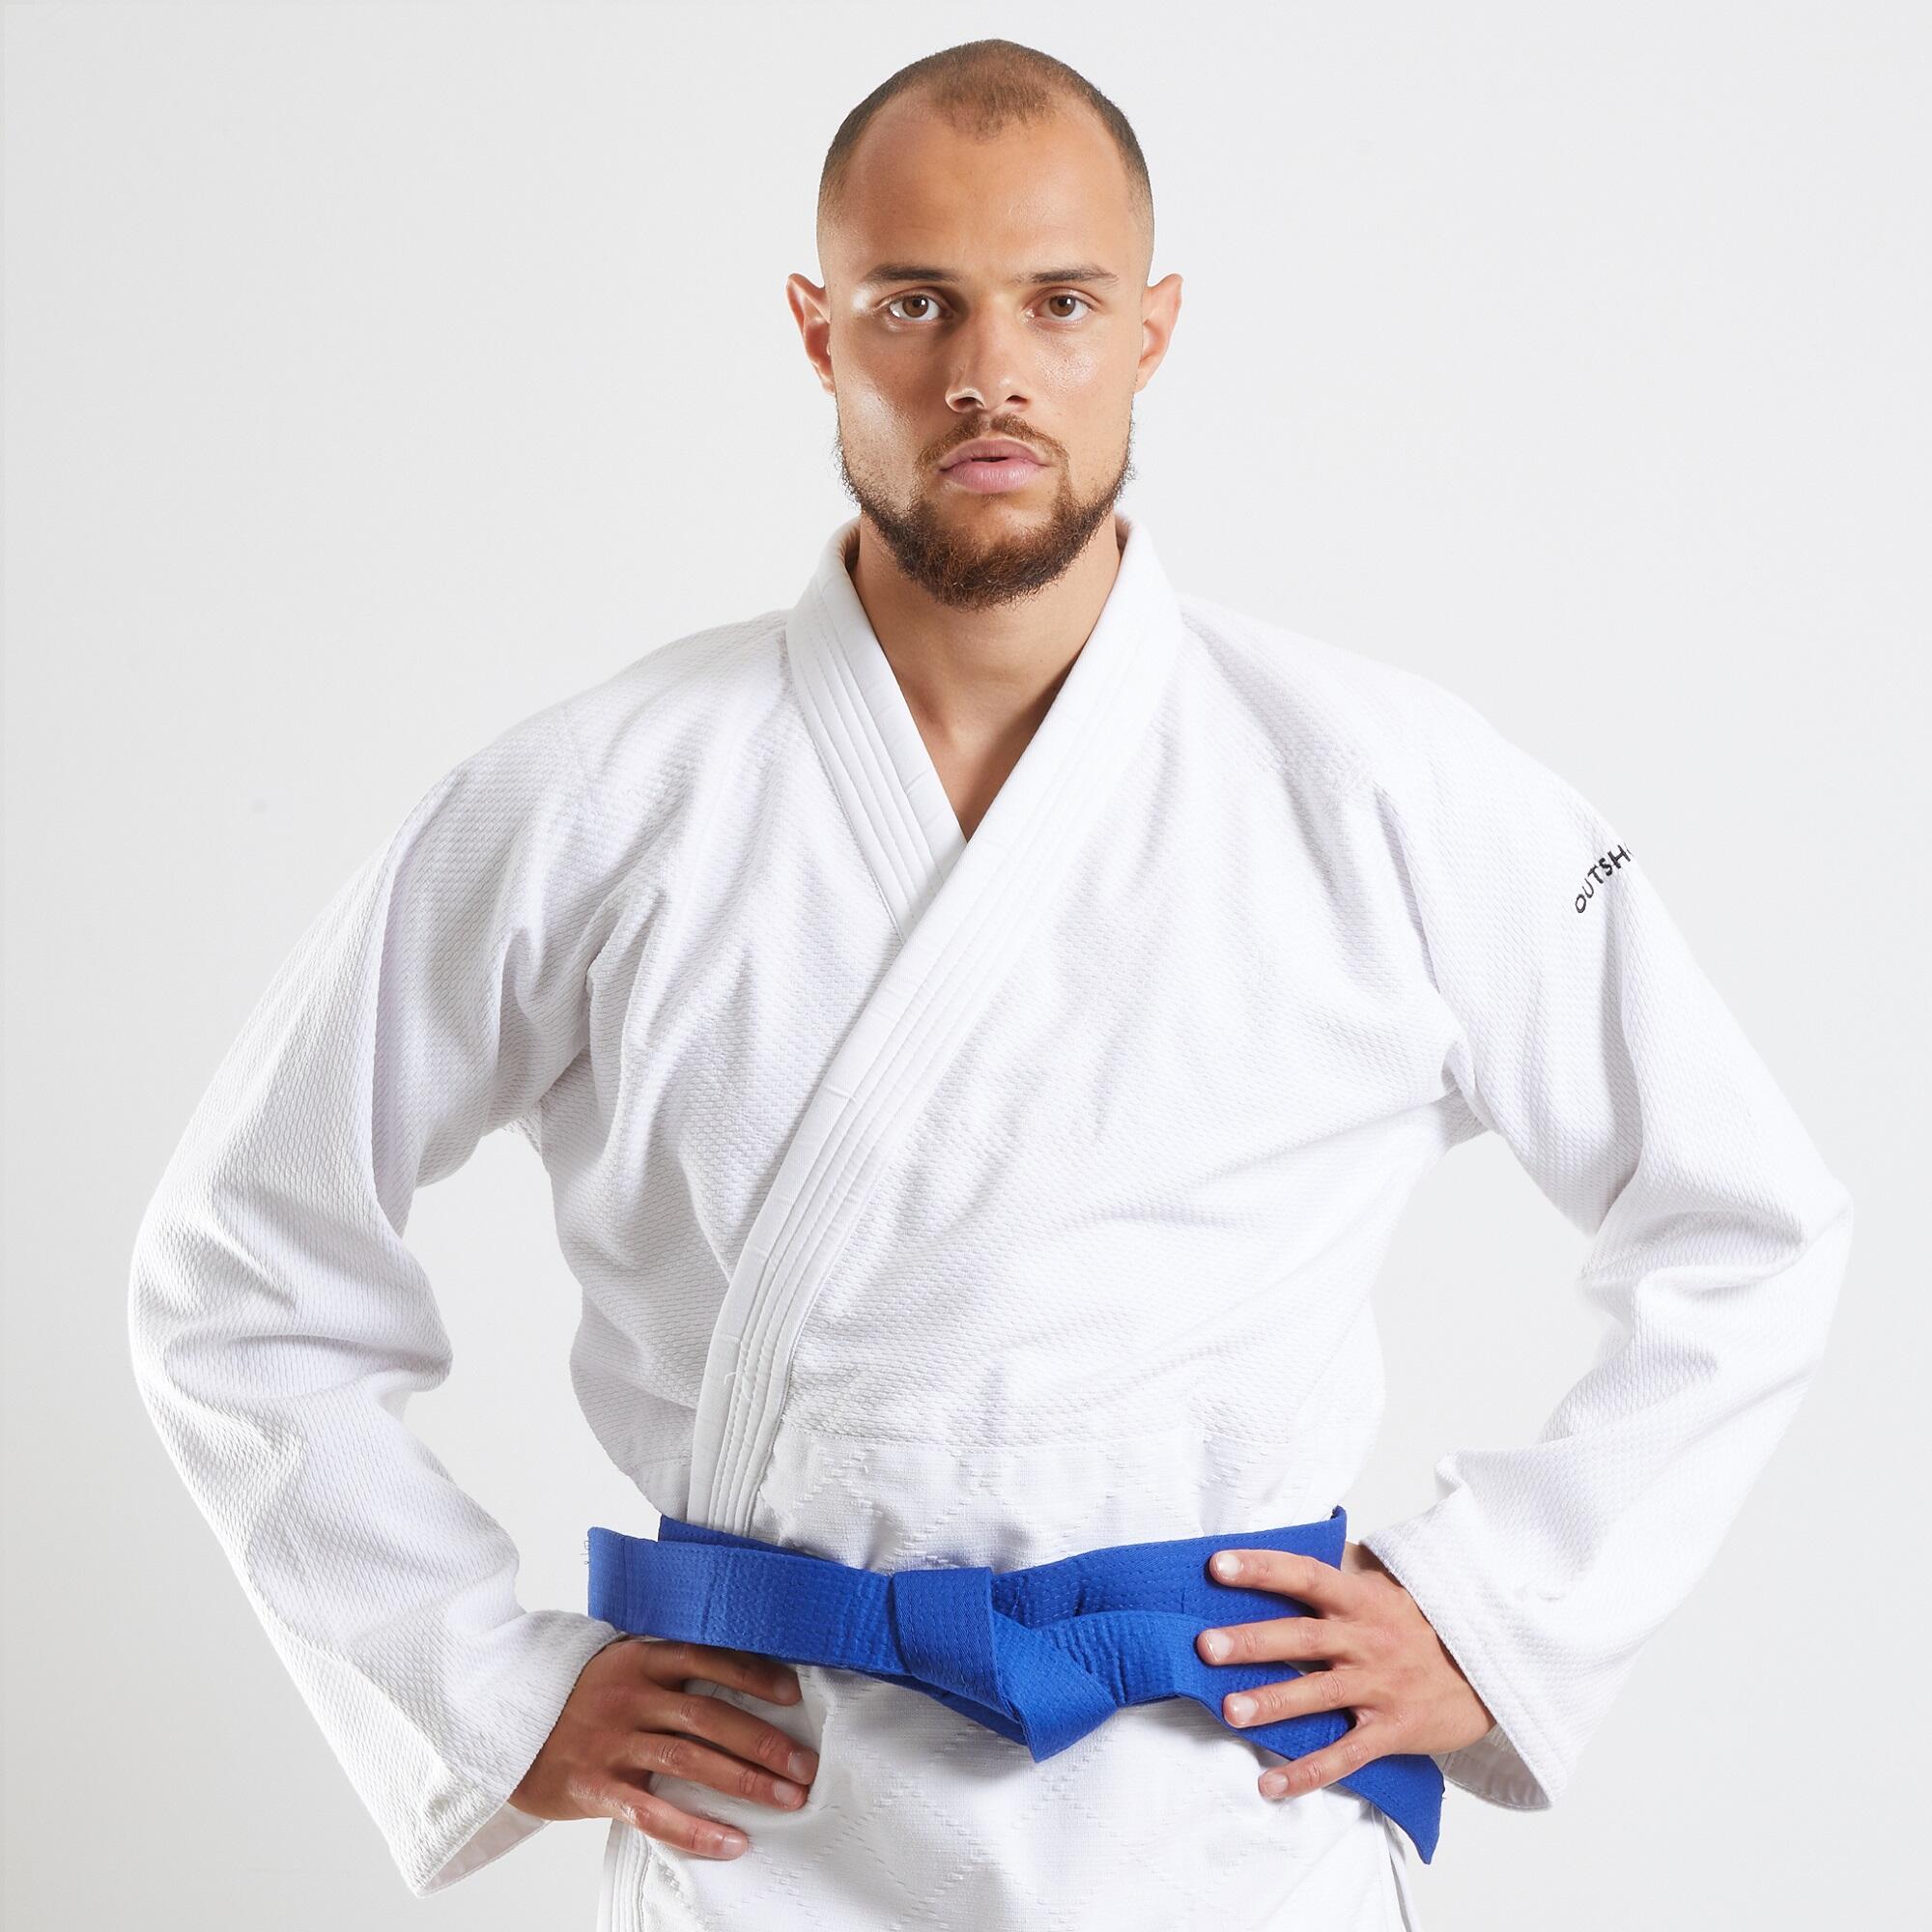 Cintura bicolore Karate e Judo 